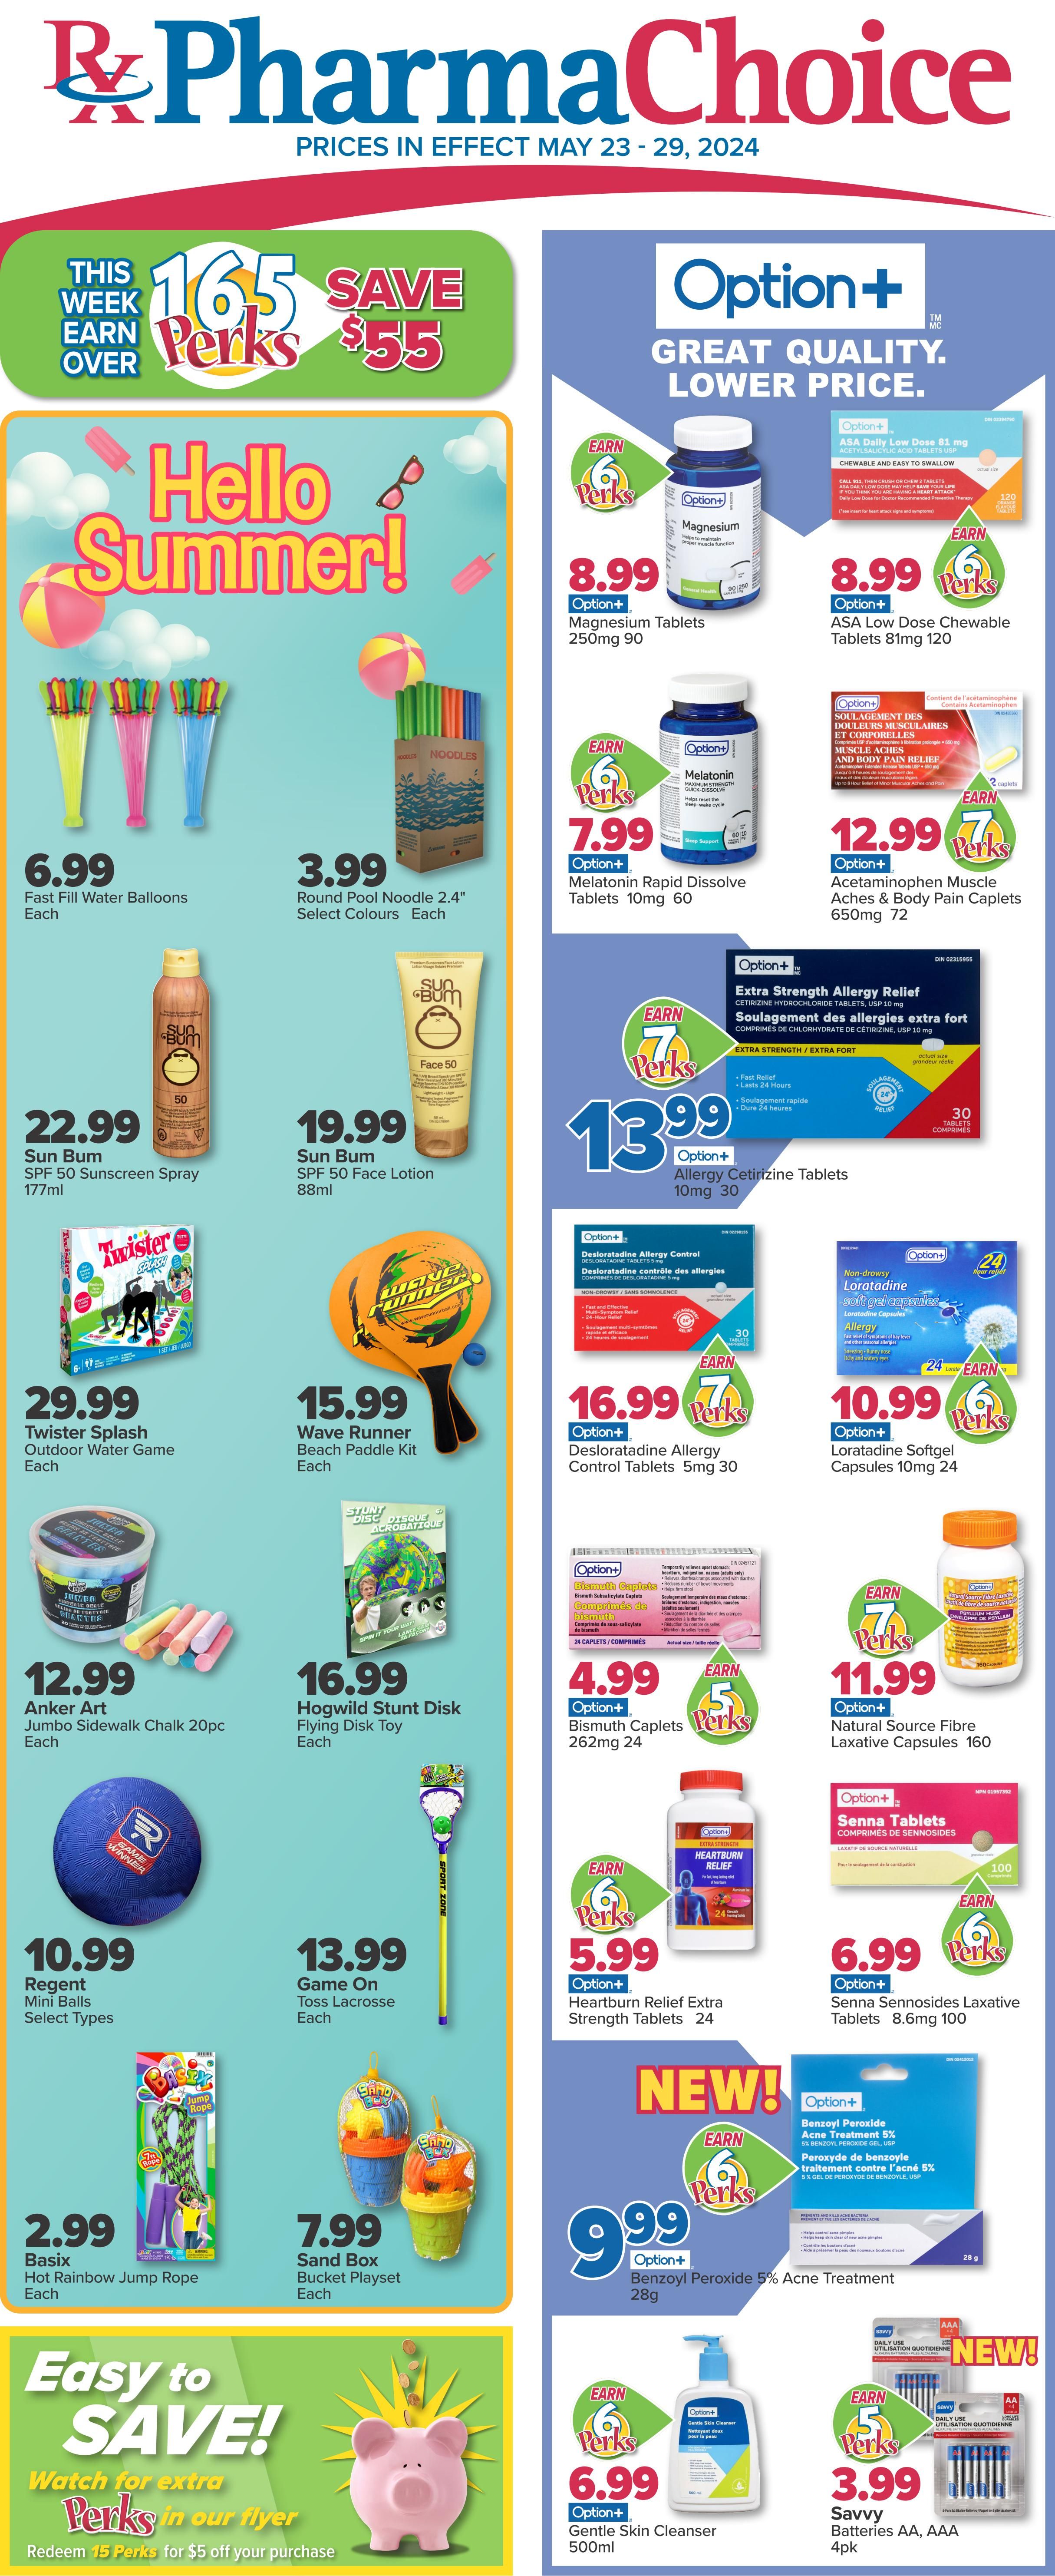 PharmaChoice - Ontario and Atlantic - Weekly Flyer Specials